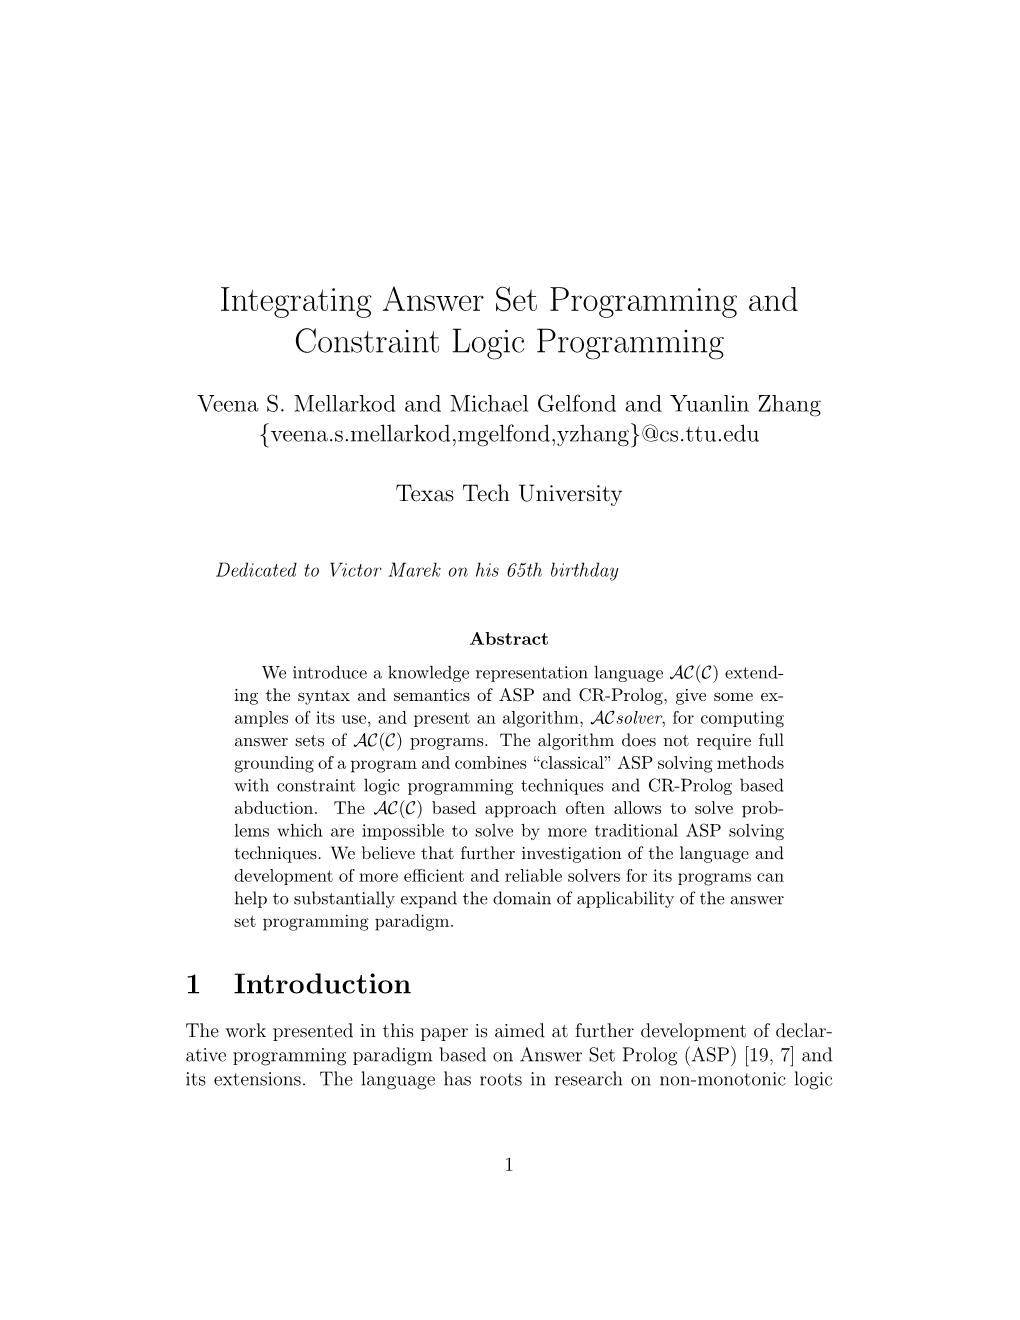 Integrating Answer Set Programming and Constraint Logic Programming